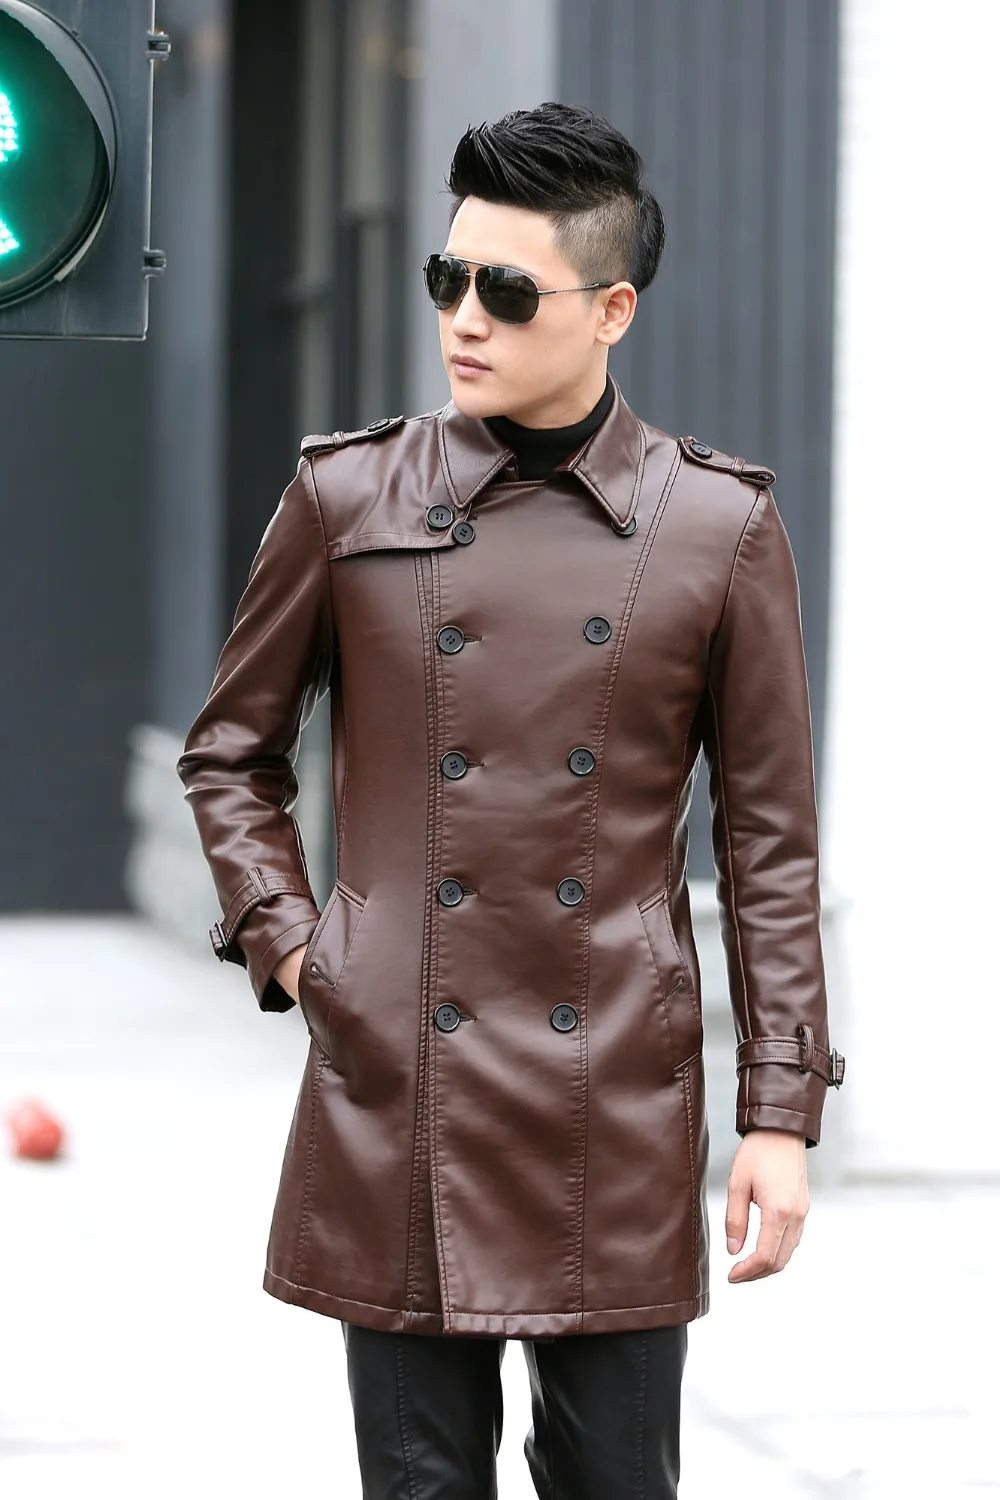 OEAID модное длинное кожаное пальто размера плюс M L XL XXL 3XL 4XL, мужская кожаная куртка, новинка, мужские куртки, пальто, мужская верхняя одежда